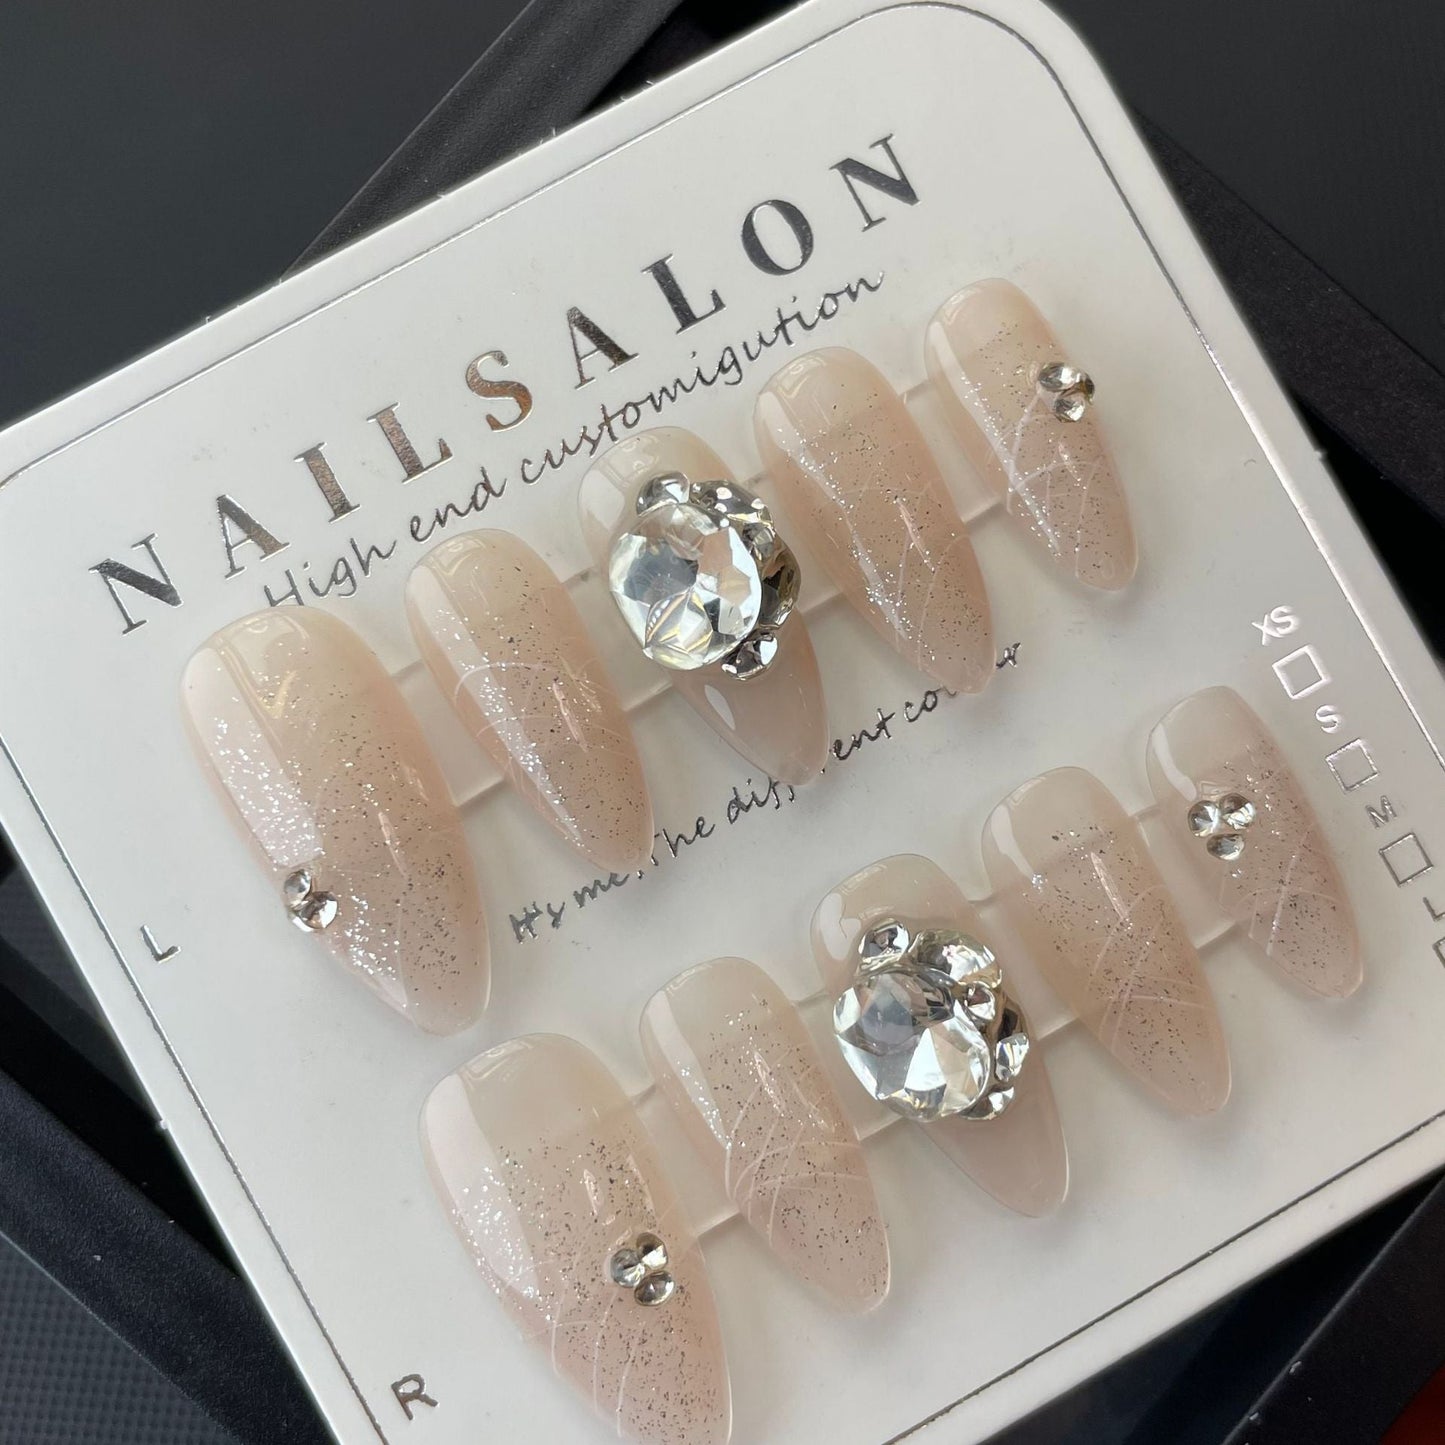 718 Rhinestone style press on nails 100% handmade false nails nude color